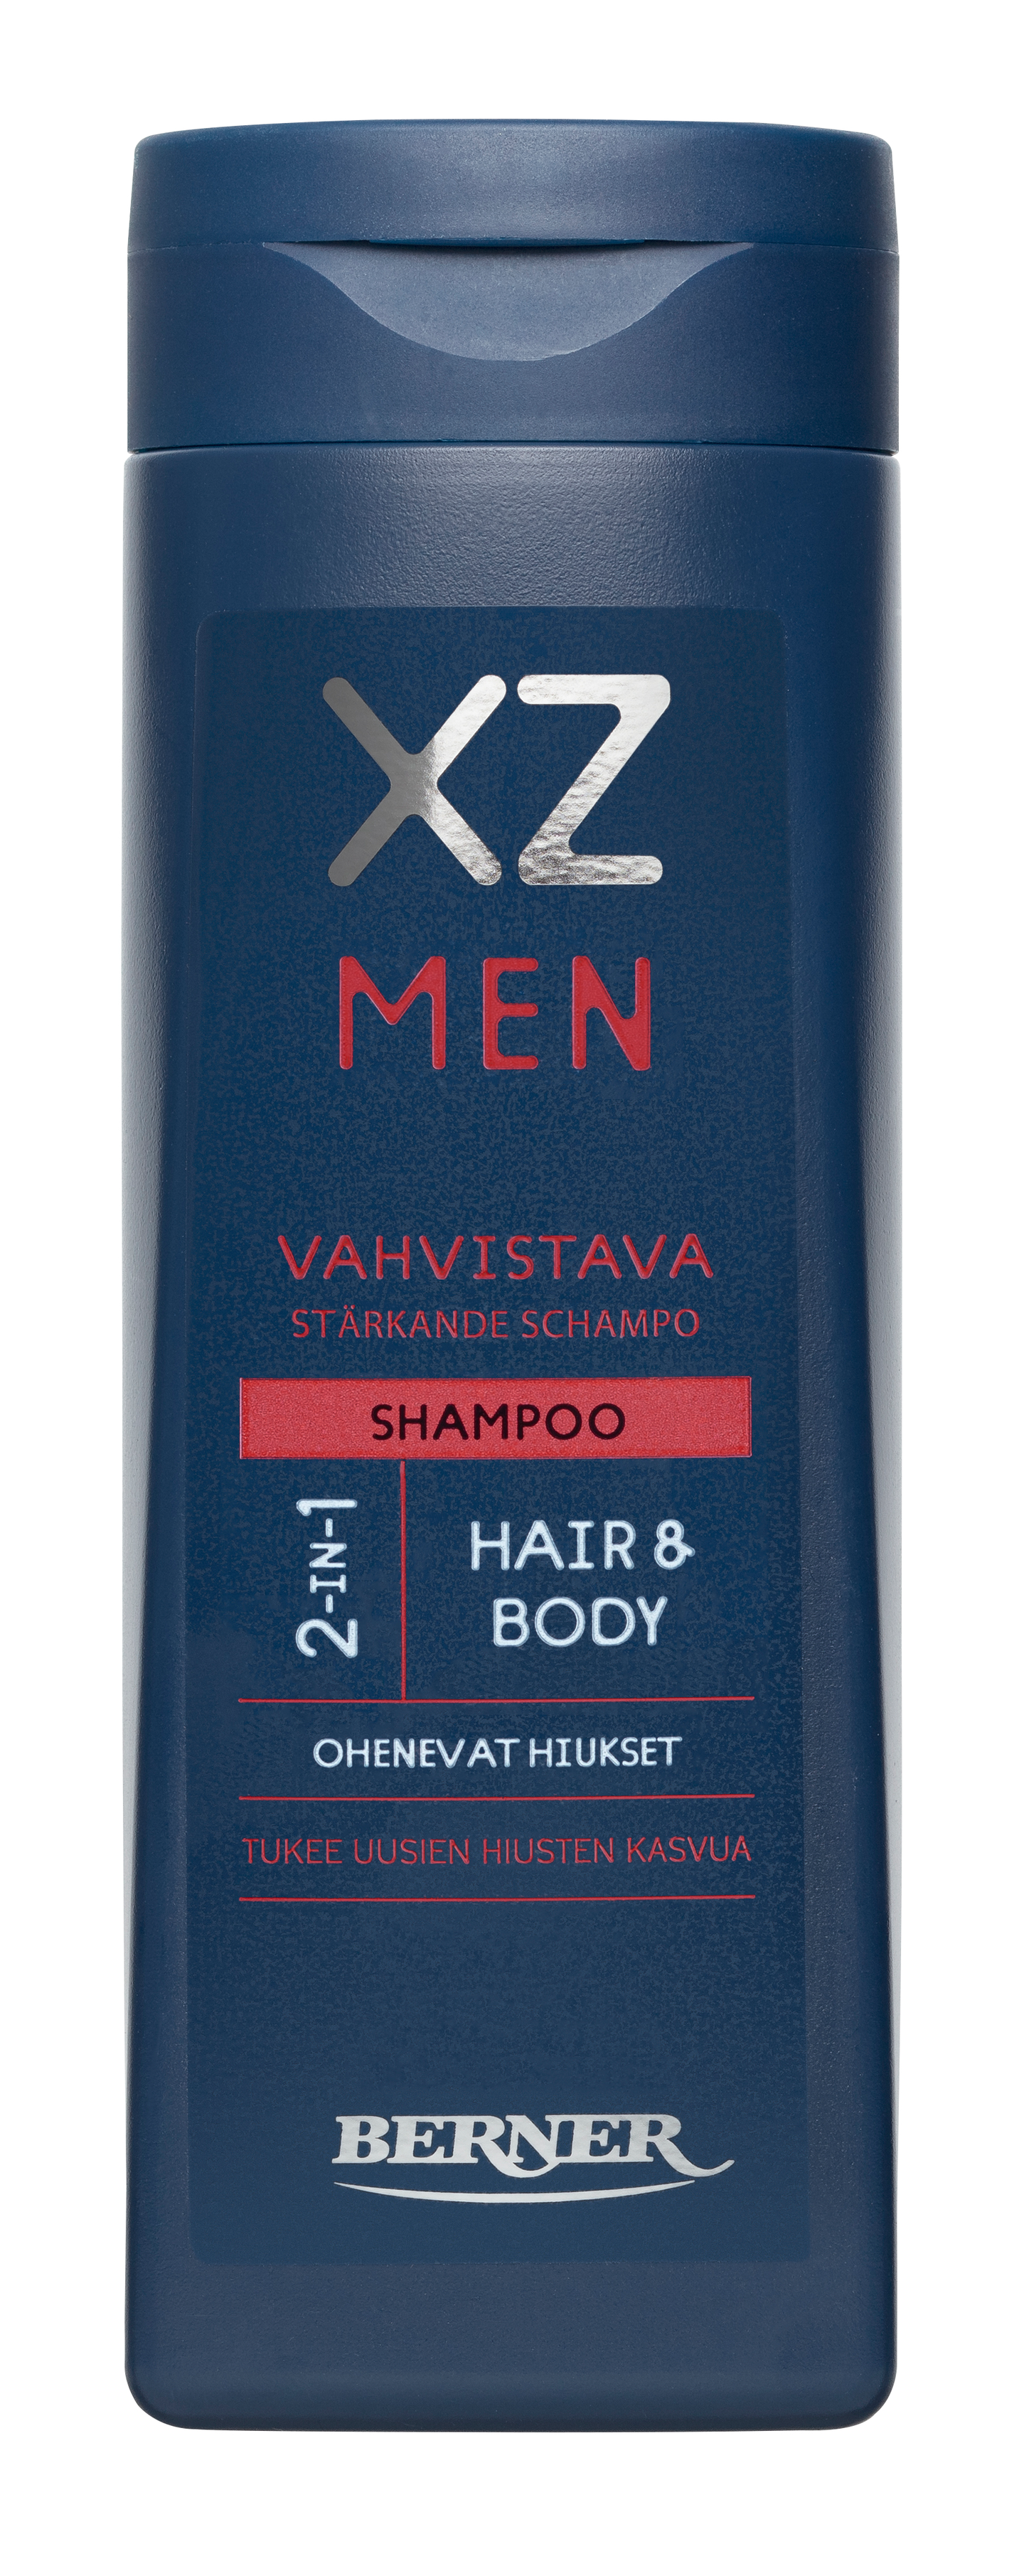 XZ Men shampoo 250ml 2in1 vahvistava